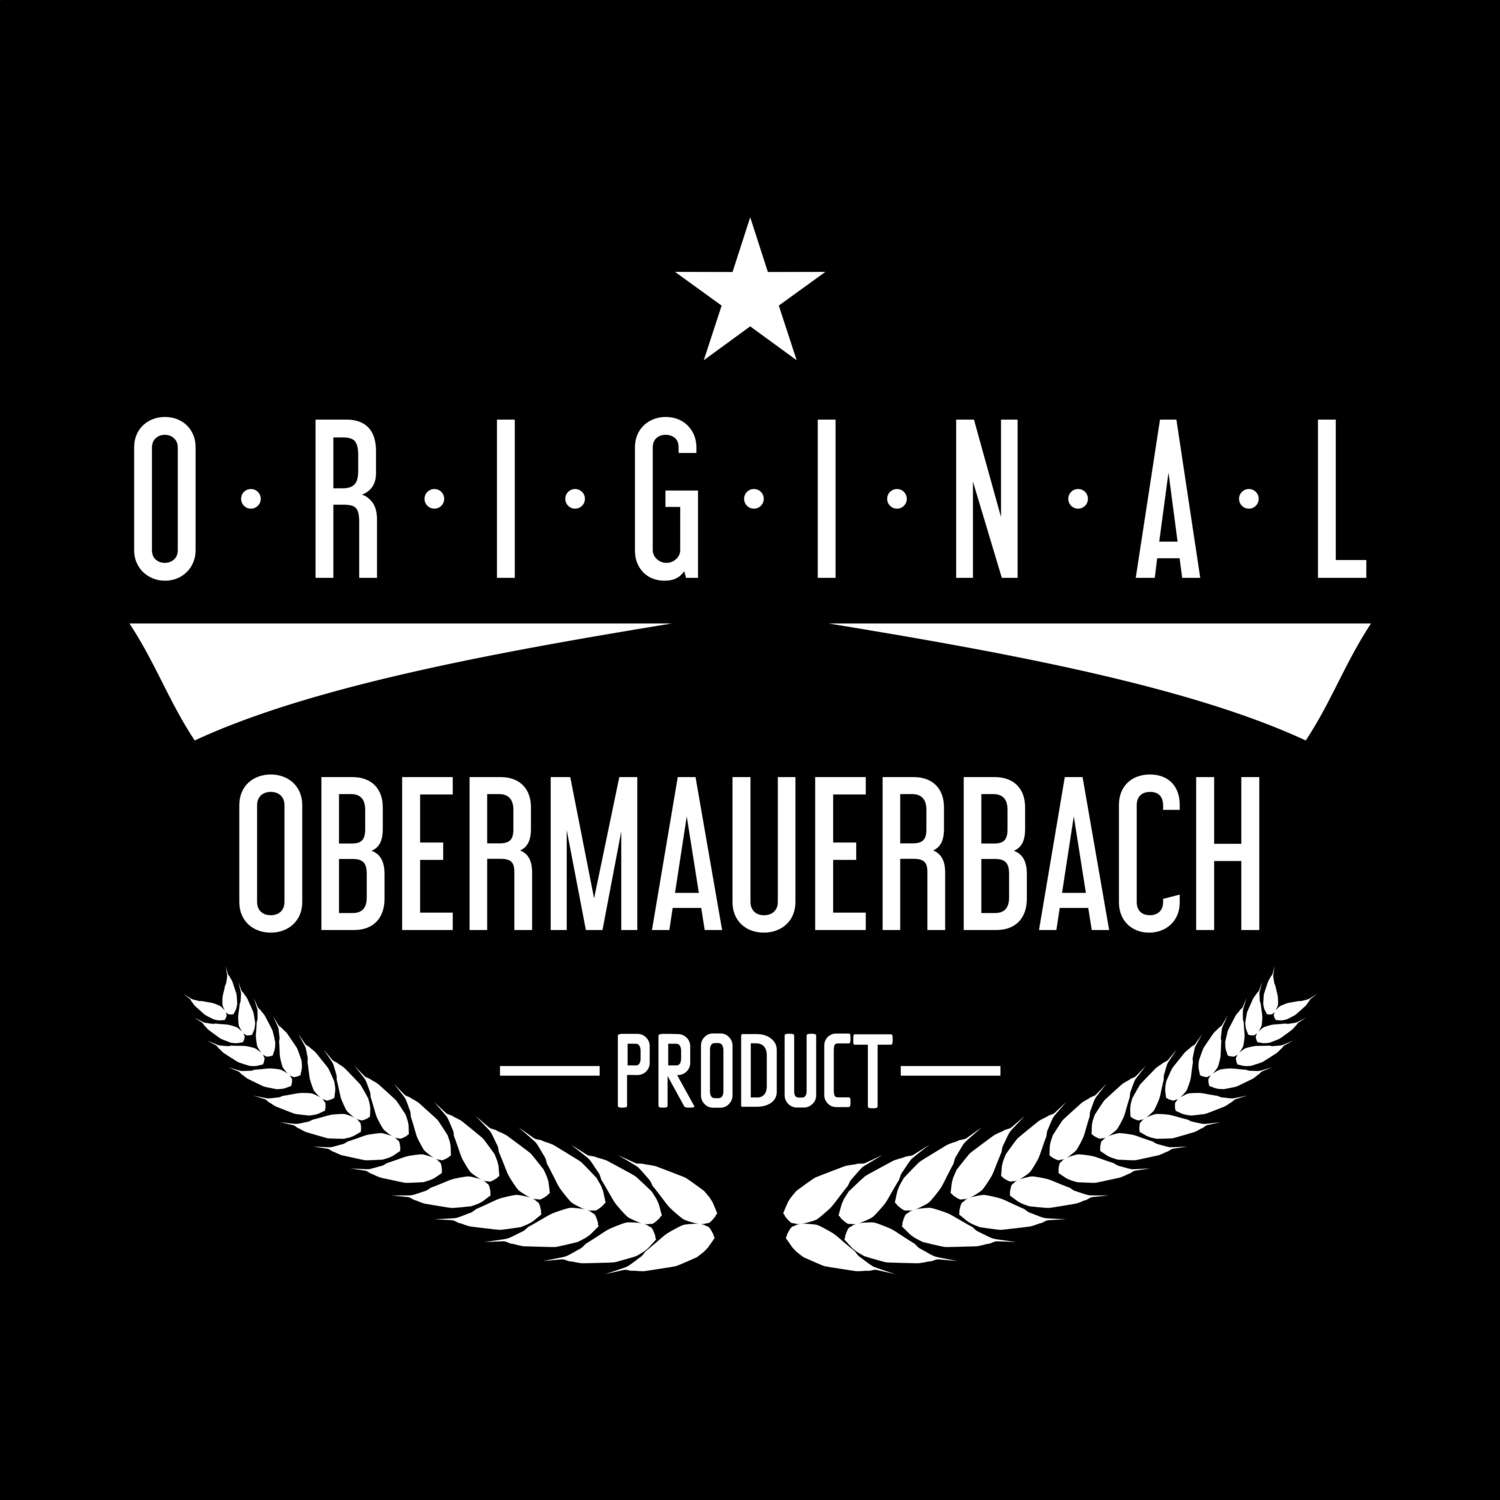 Obermauerbach T-Shirt »Original Product«